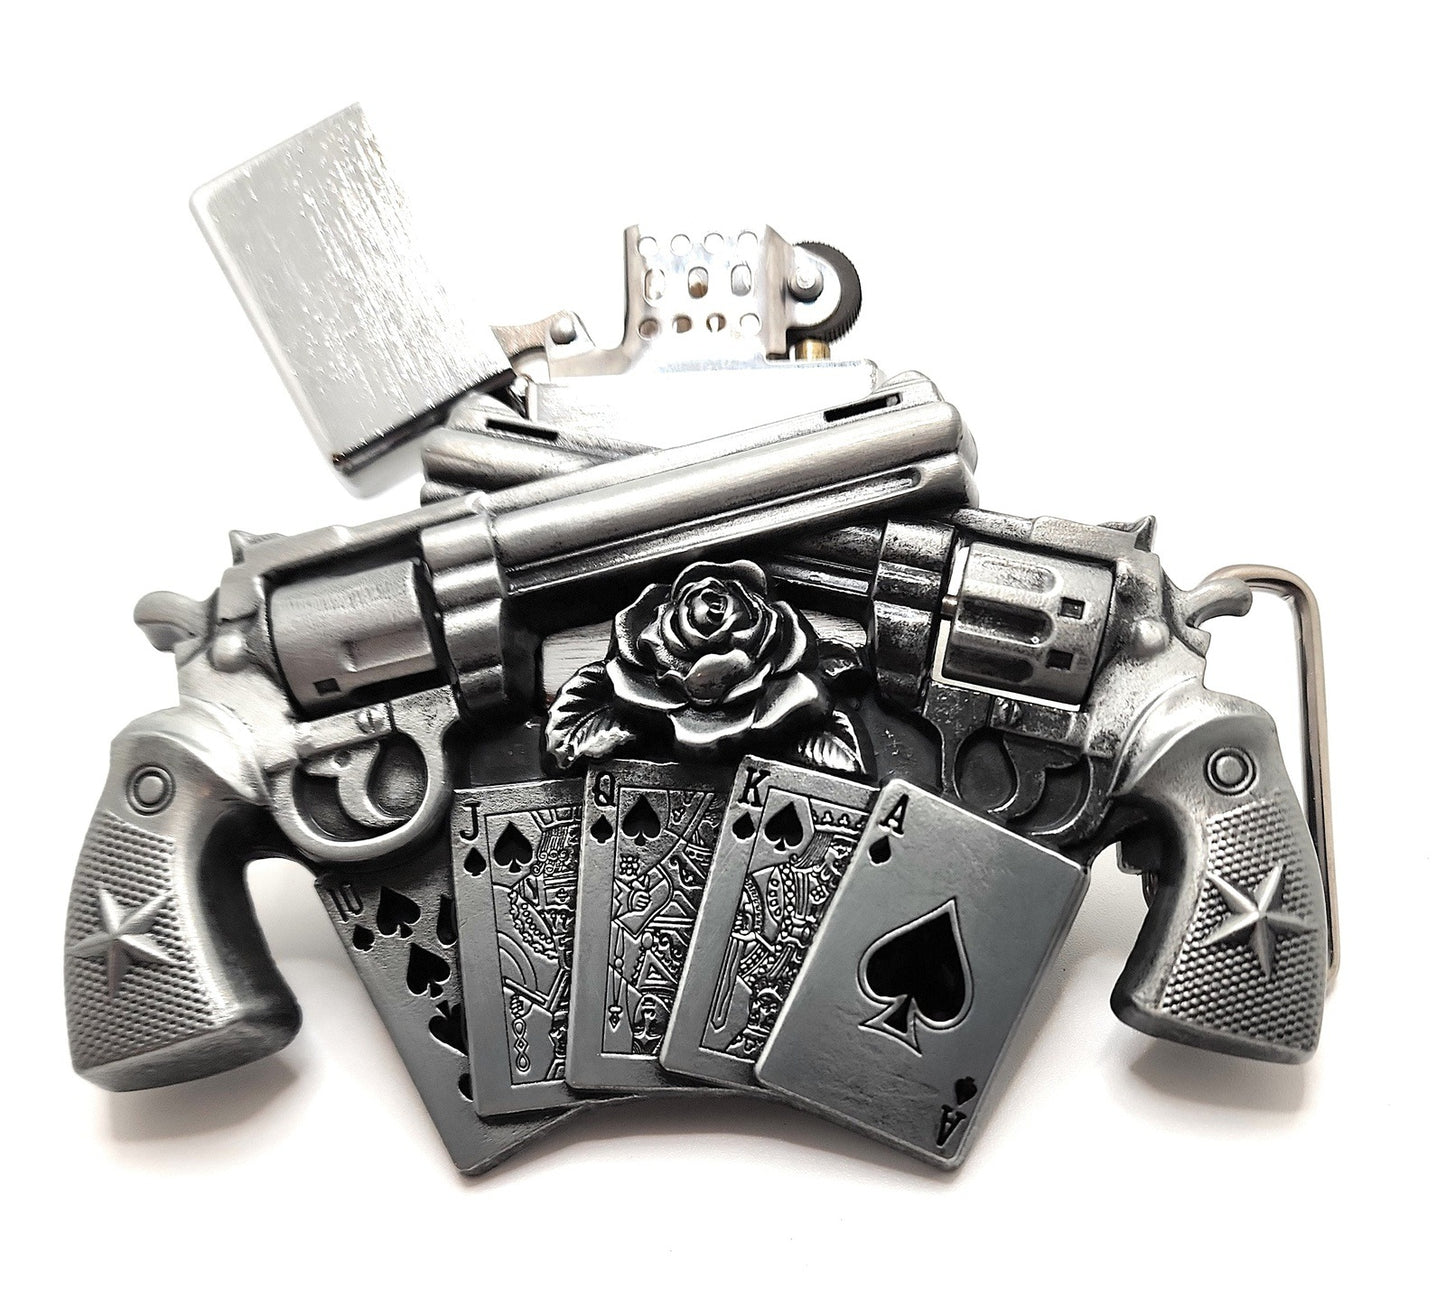 Spinning Revolvers Lighter Belt Buckle and Premium Leather Belt shop.AxeDr.com Buckles with Belt, Genuine Leather